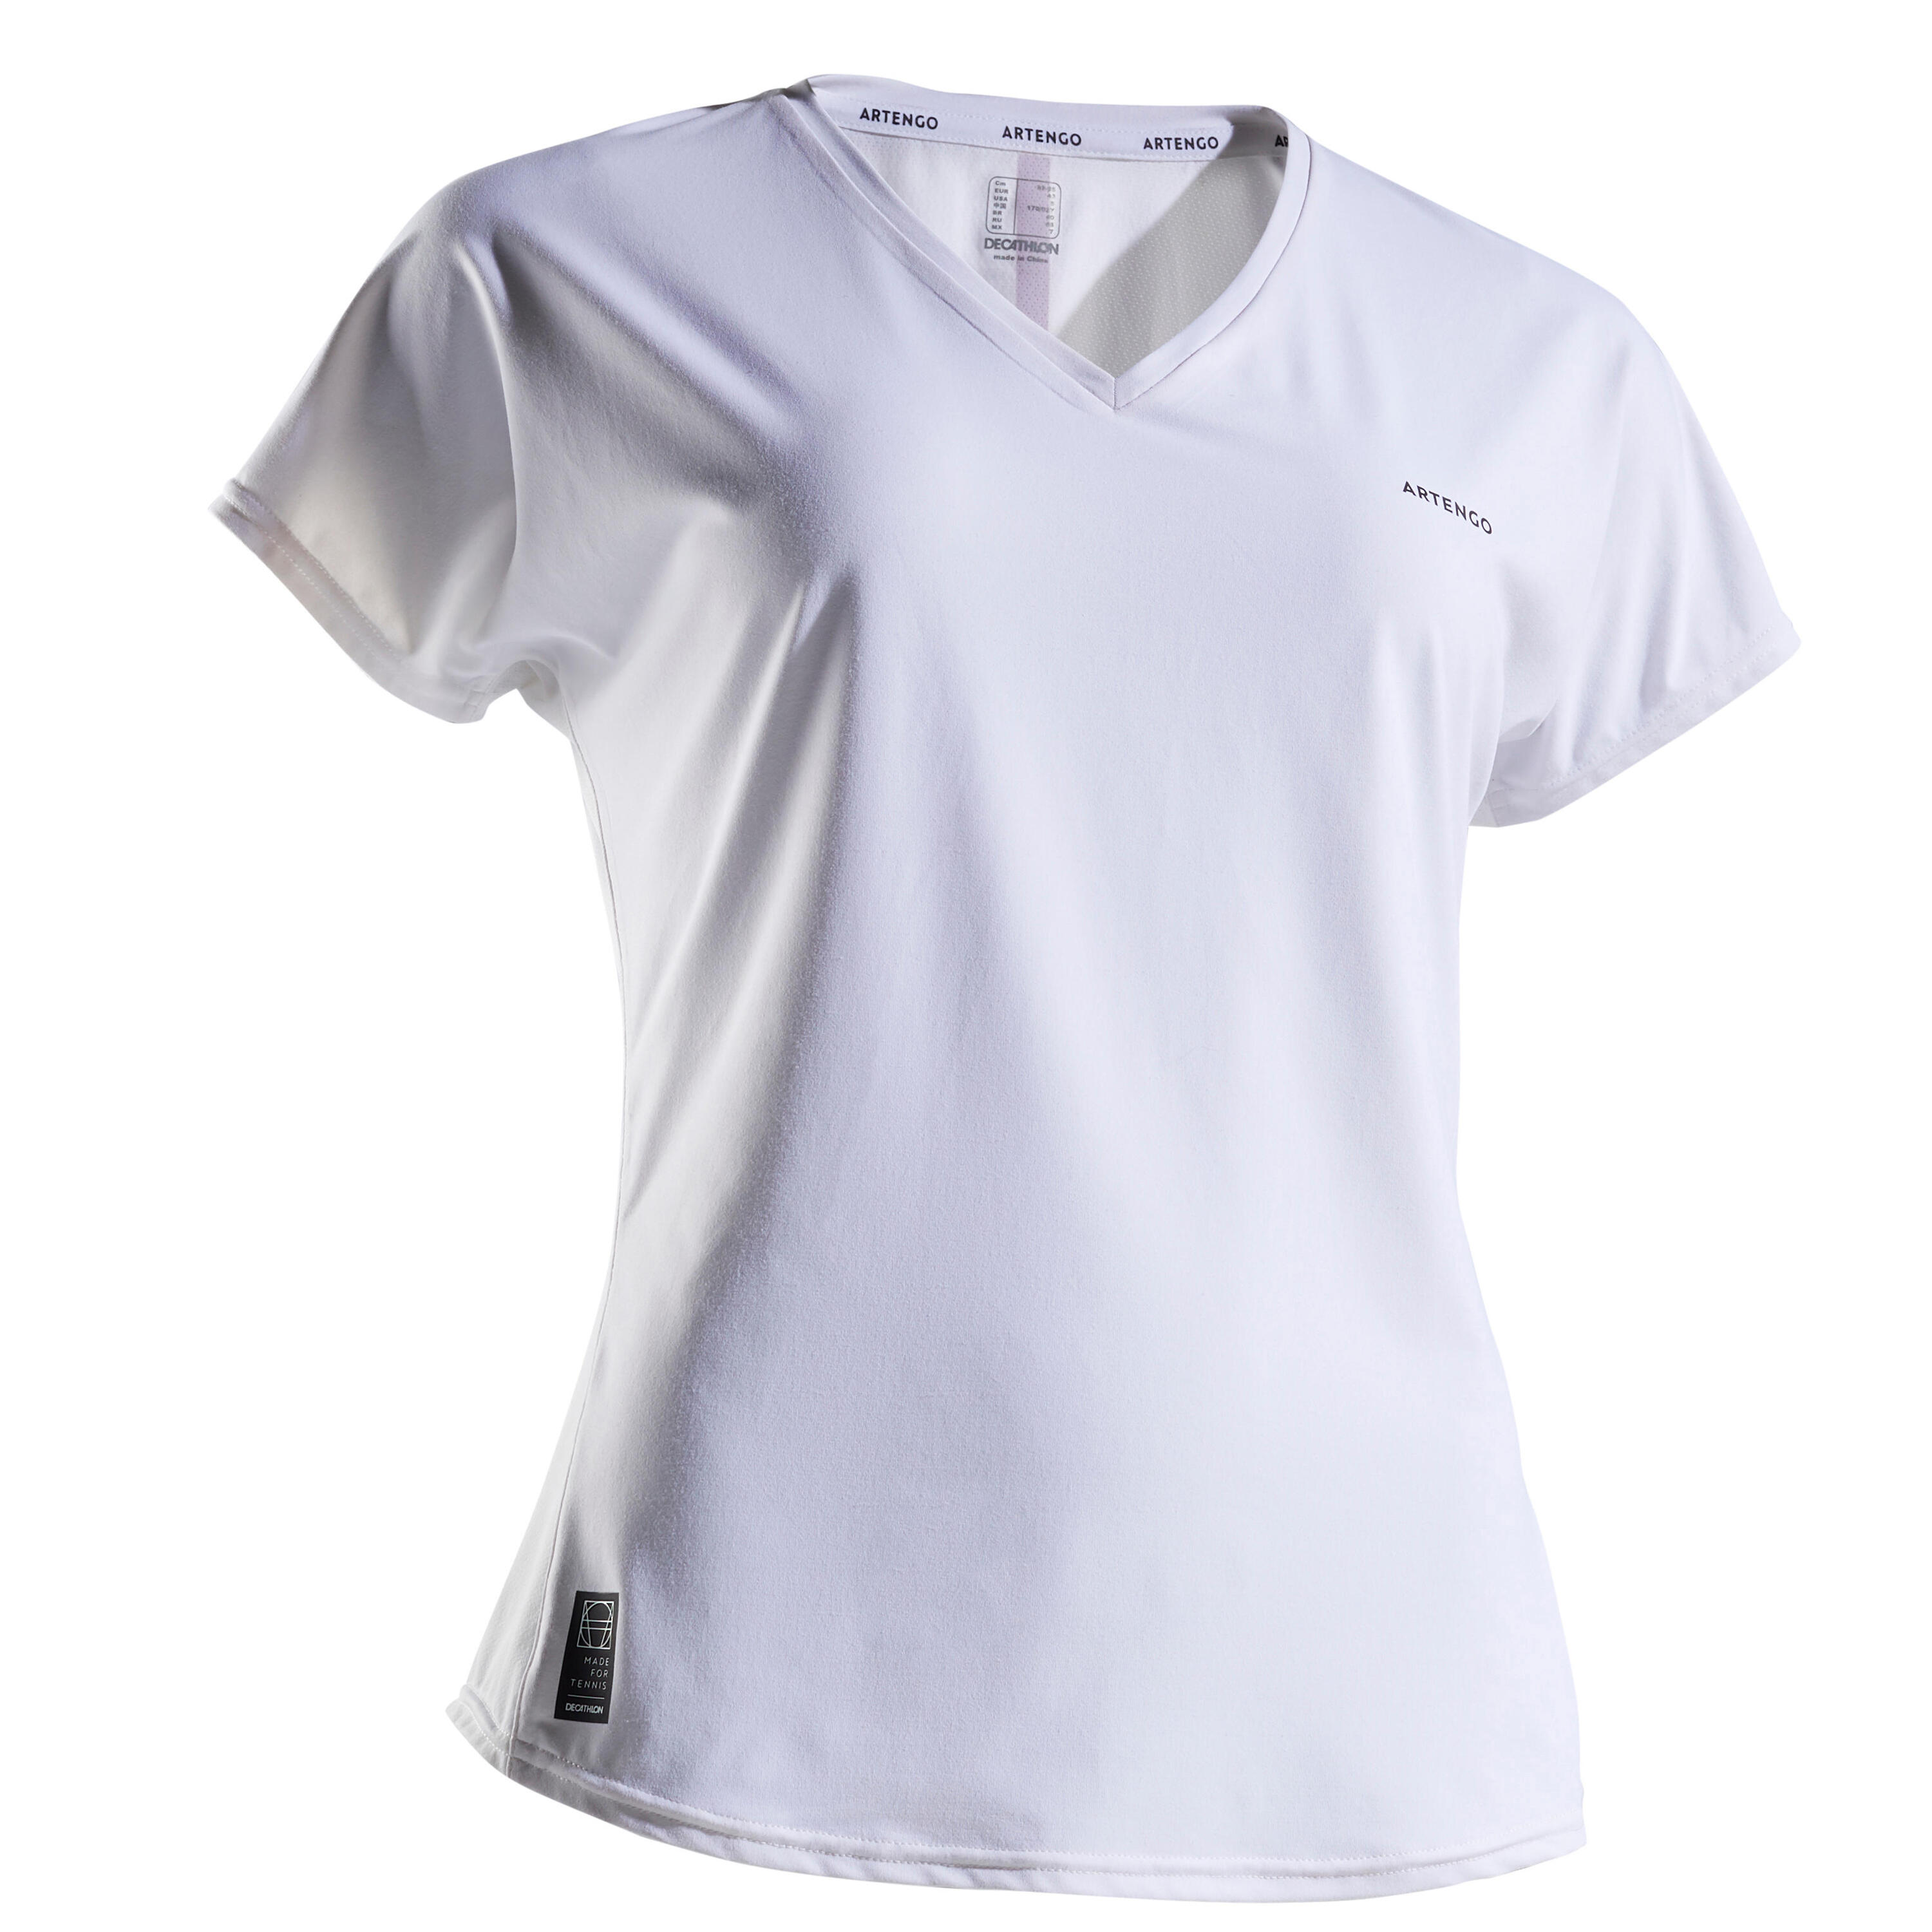 ARTENGO Soft 500 Women's Tennis T-Shirt - White